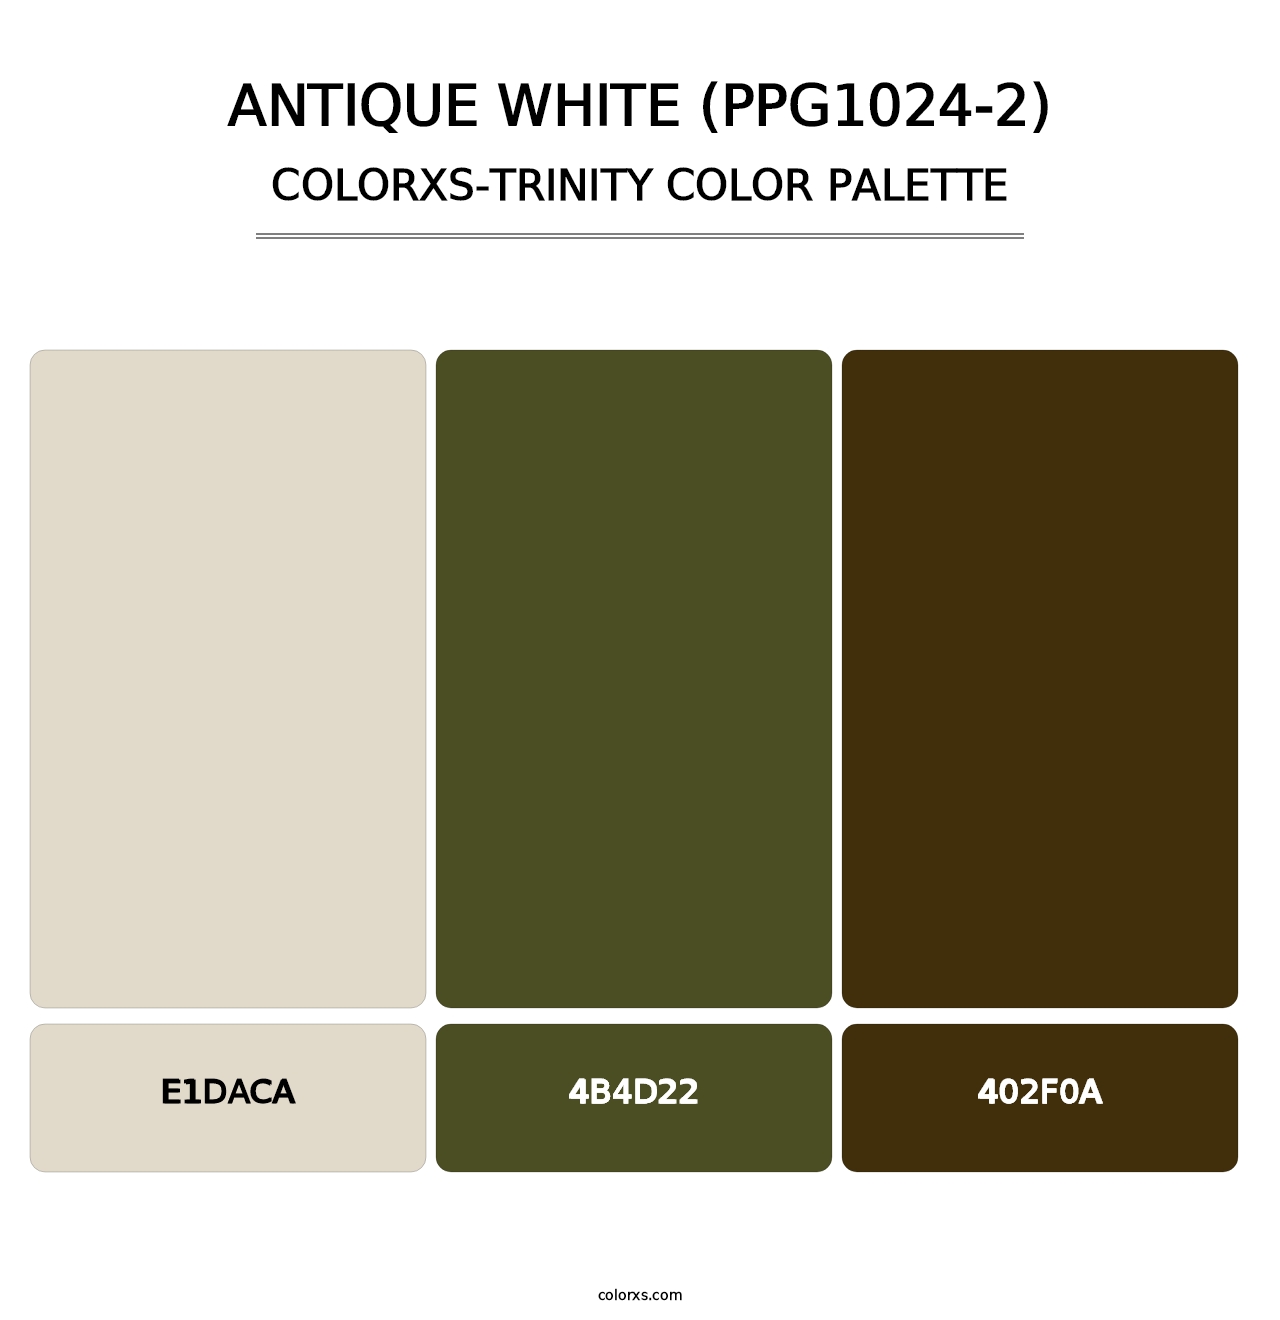 Antique White (PPG1024-2) - Colorxs Trinity Palette